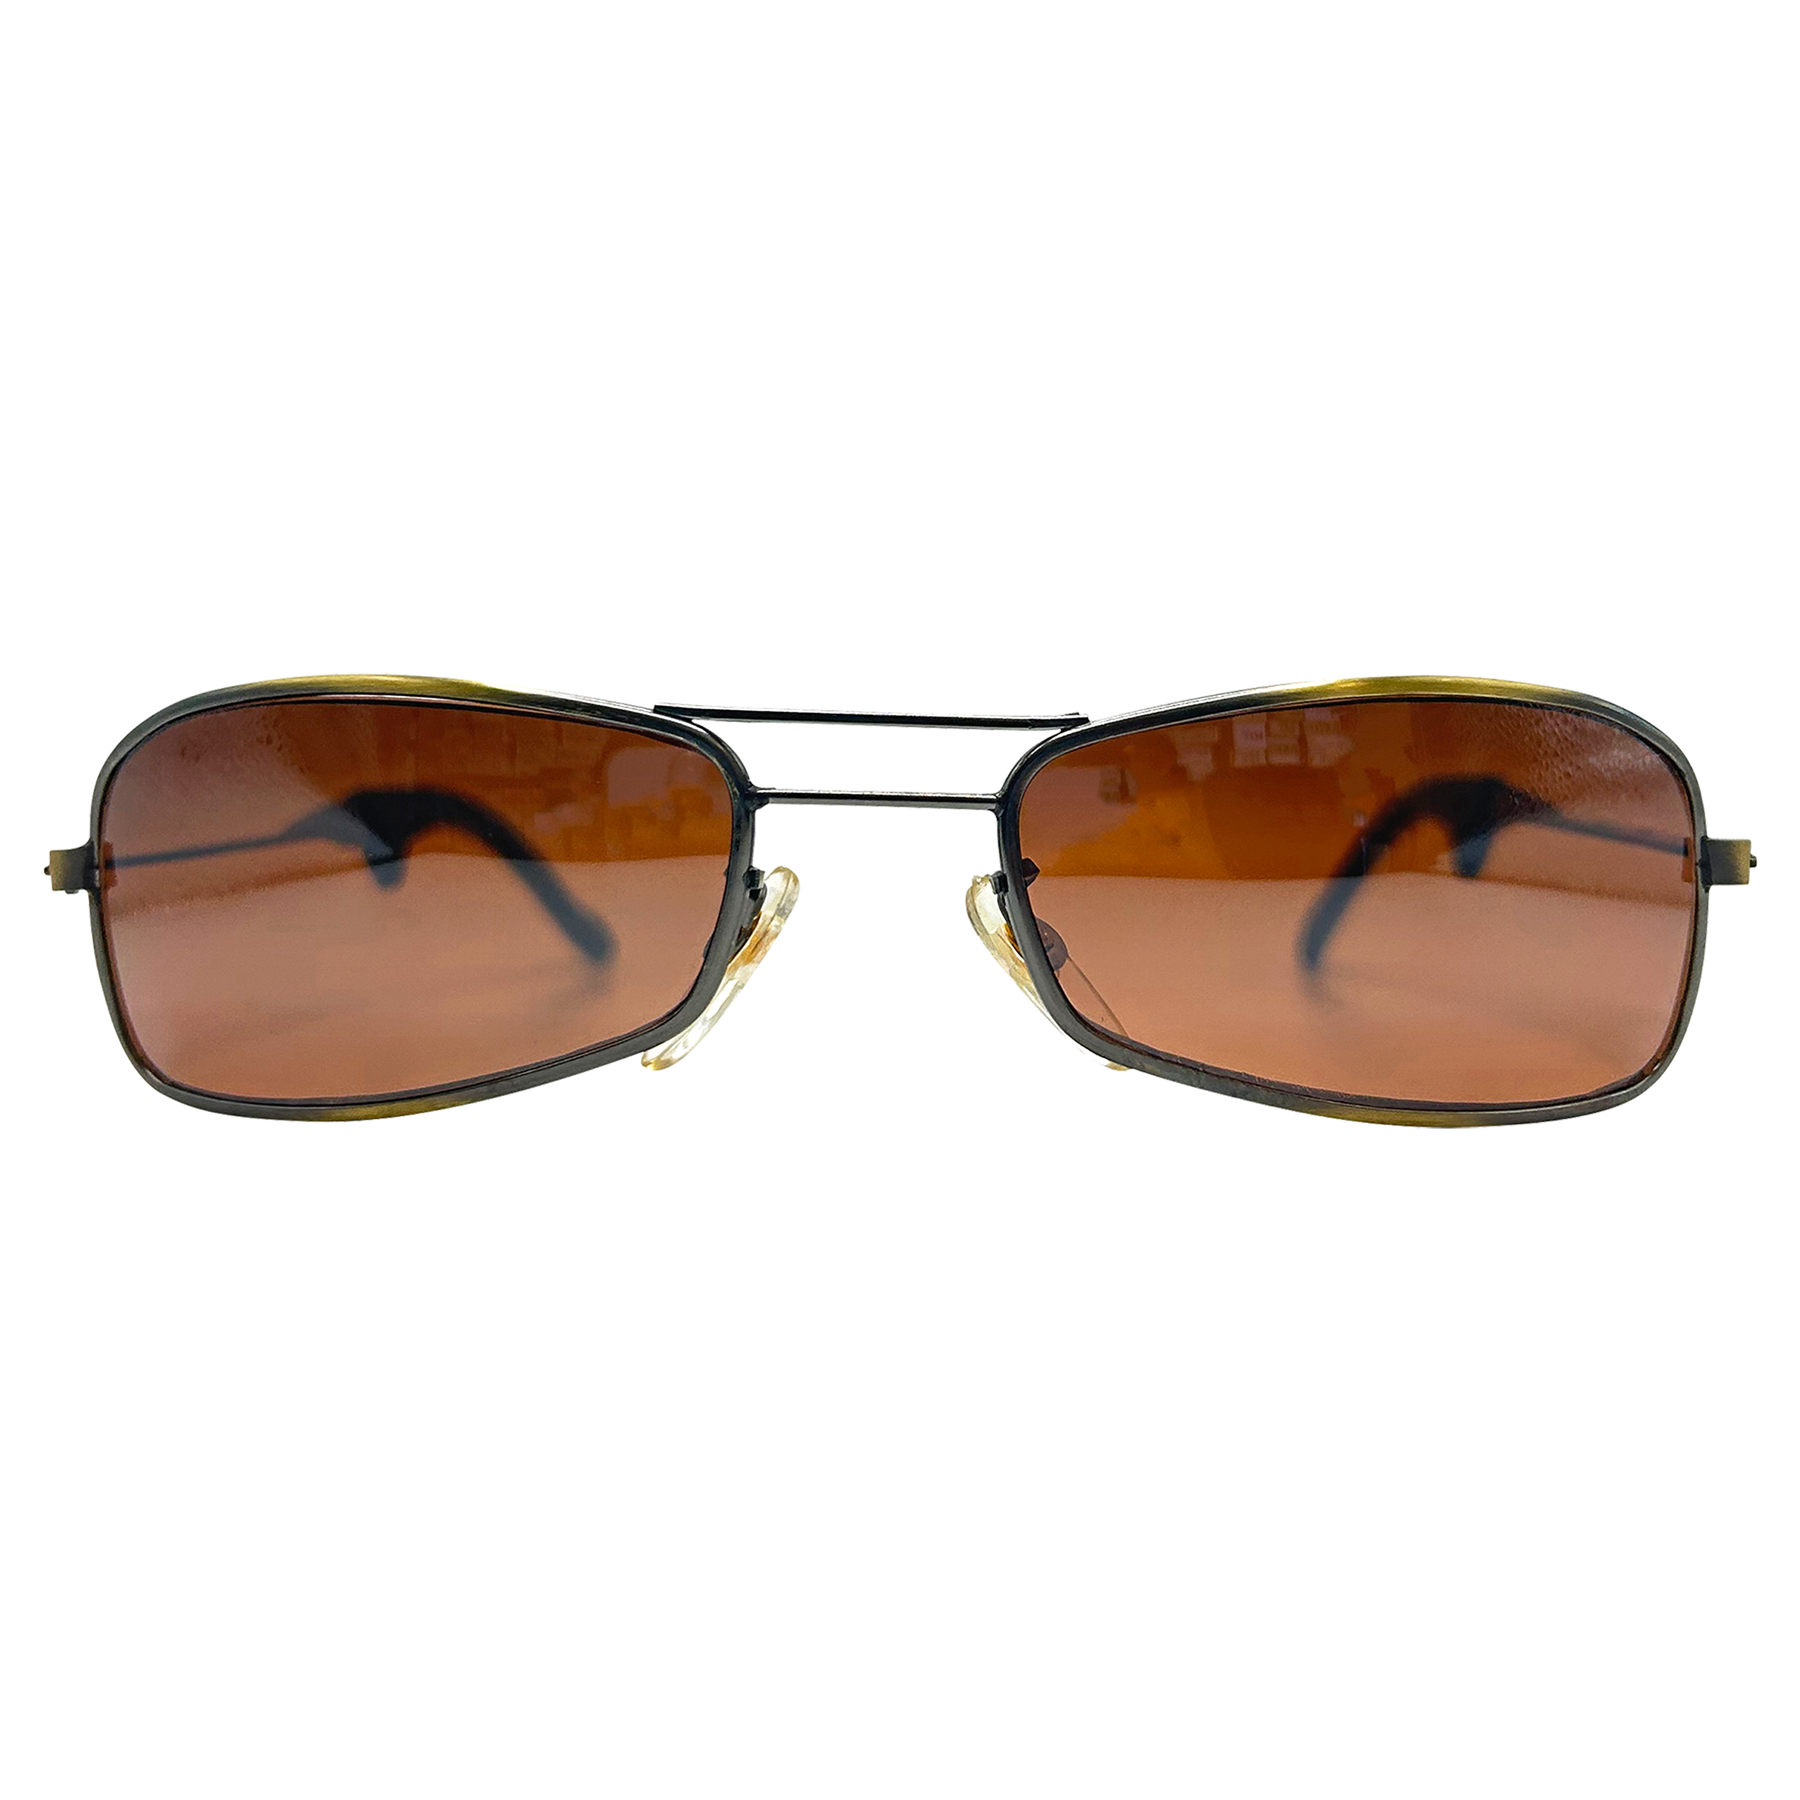 GROUND CONTROL 90s Sunglasses | Blueblockers | Day Driving